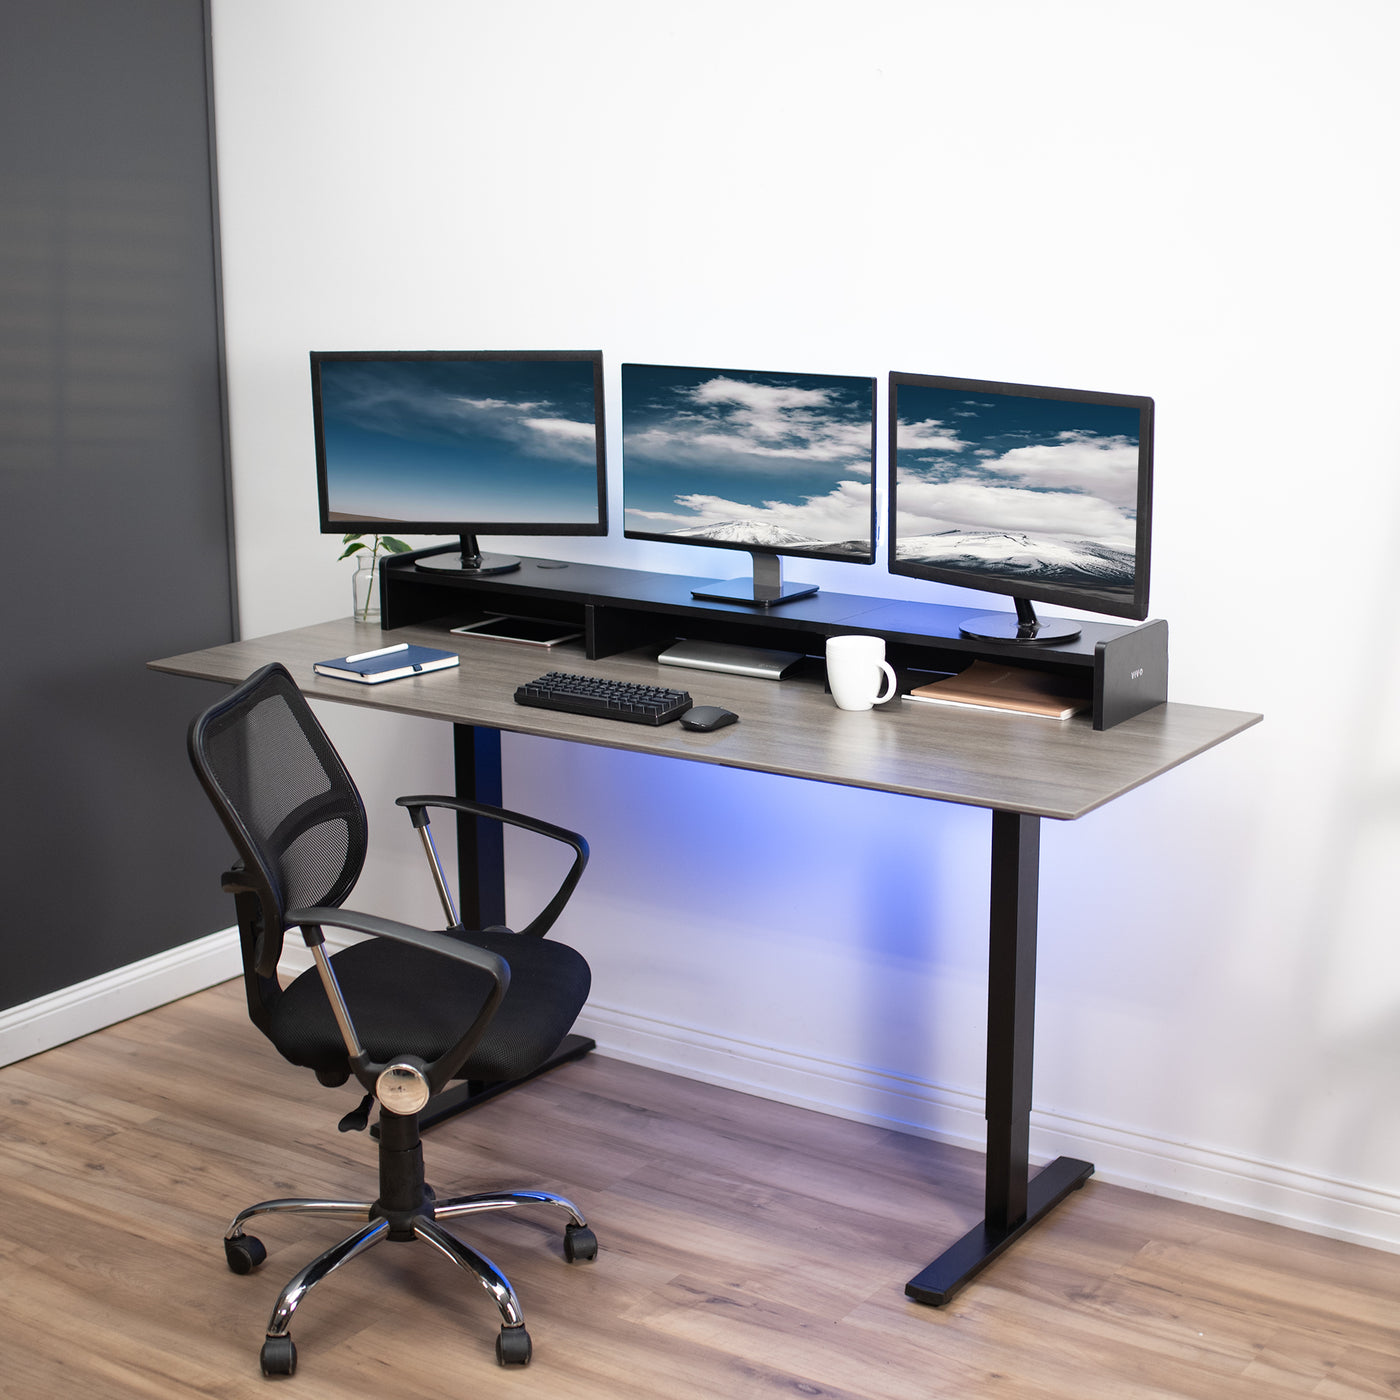 Desktop monitor riser for multiple monitors and comfortable display viewing.